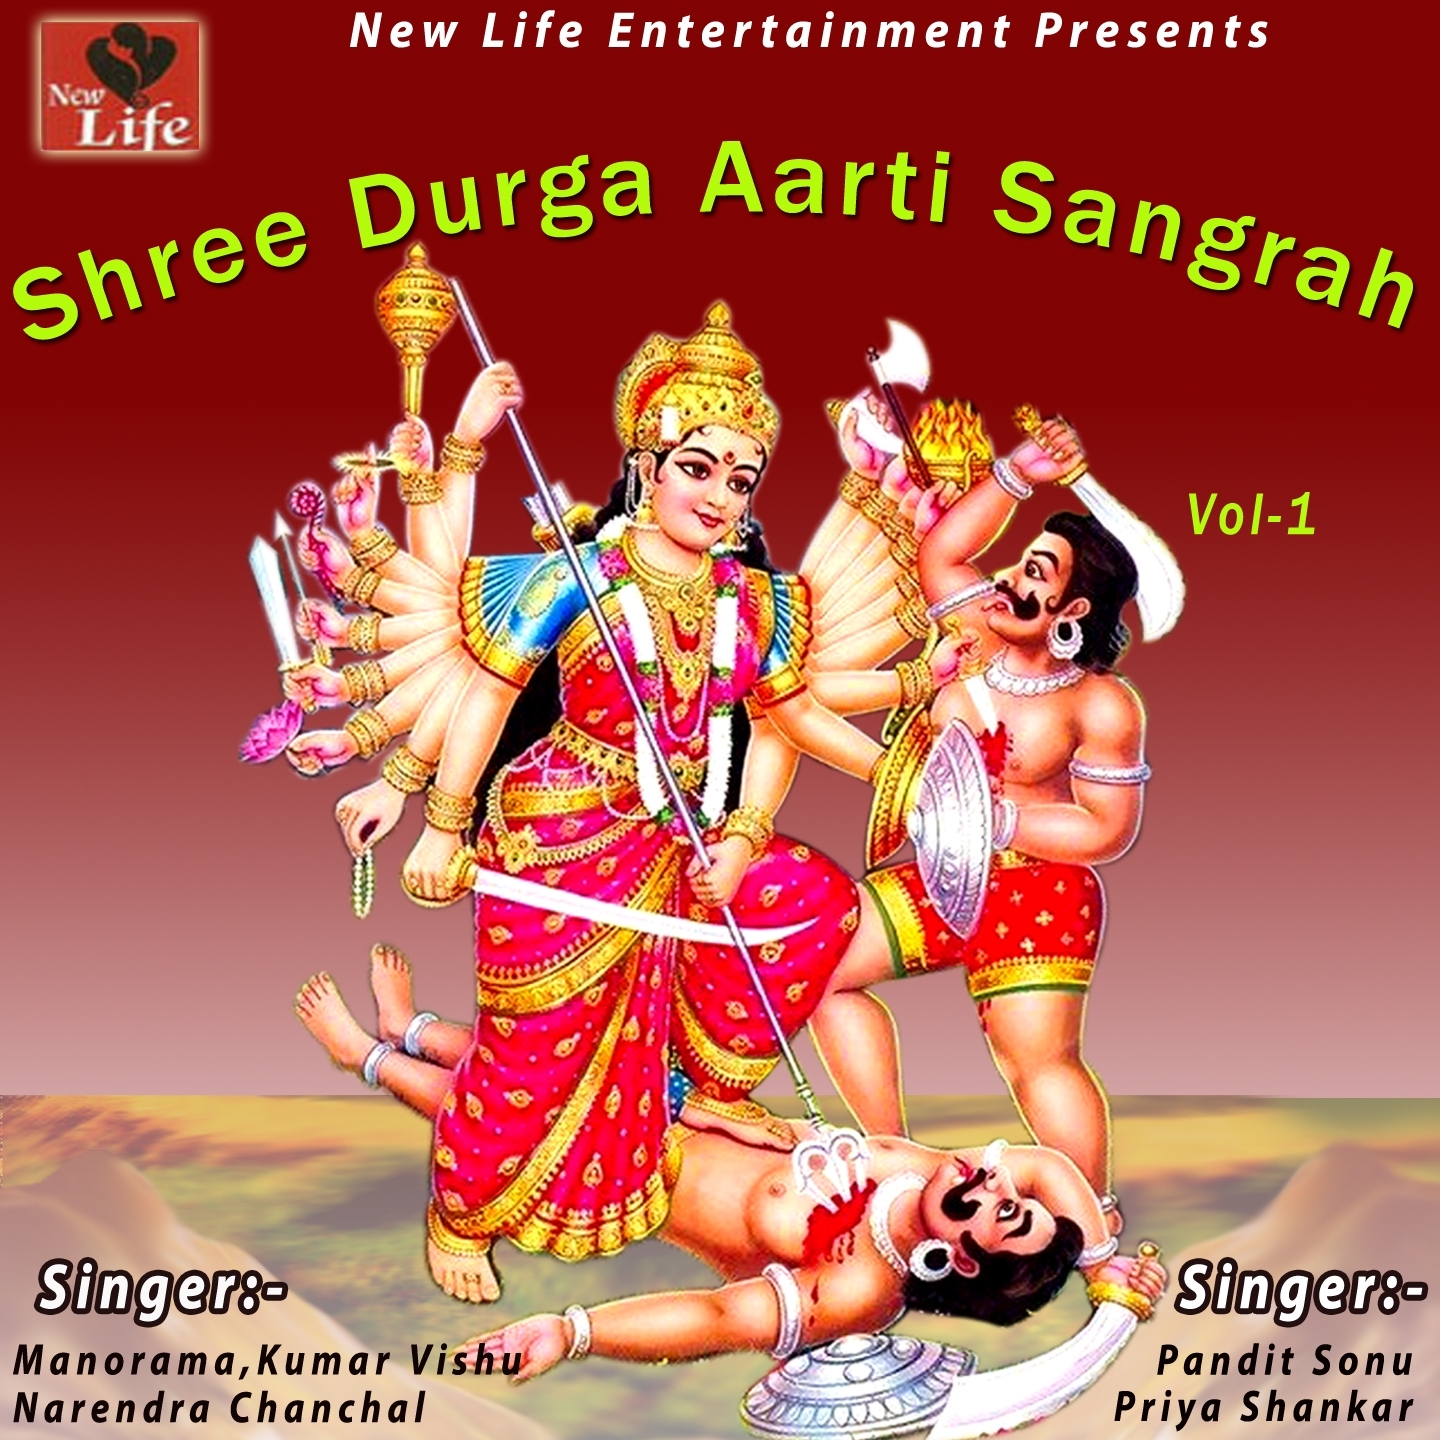 Shree Durga Aarti Sangrah, Vol. 1